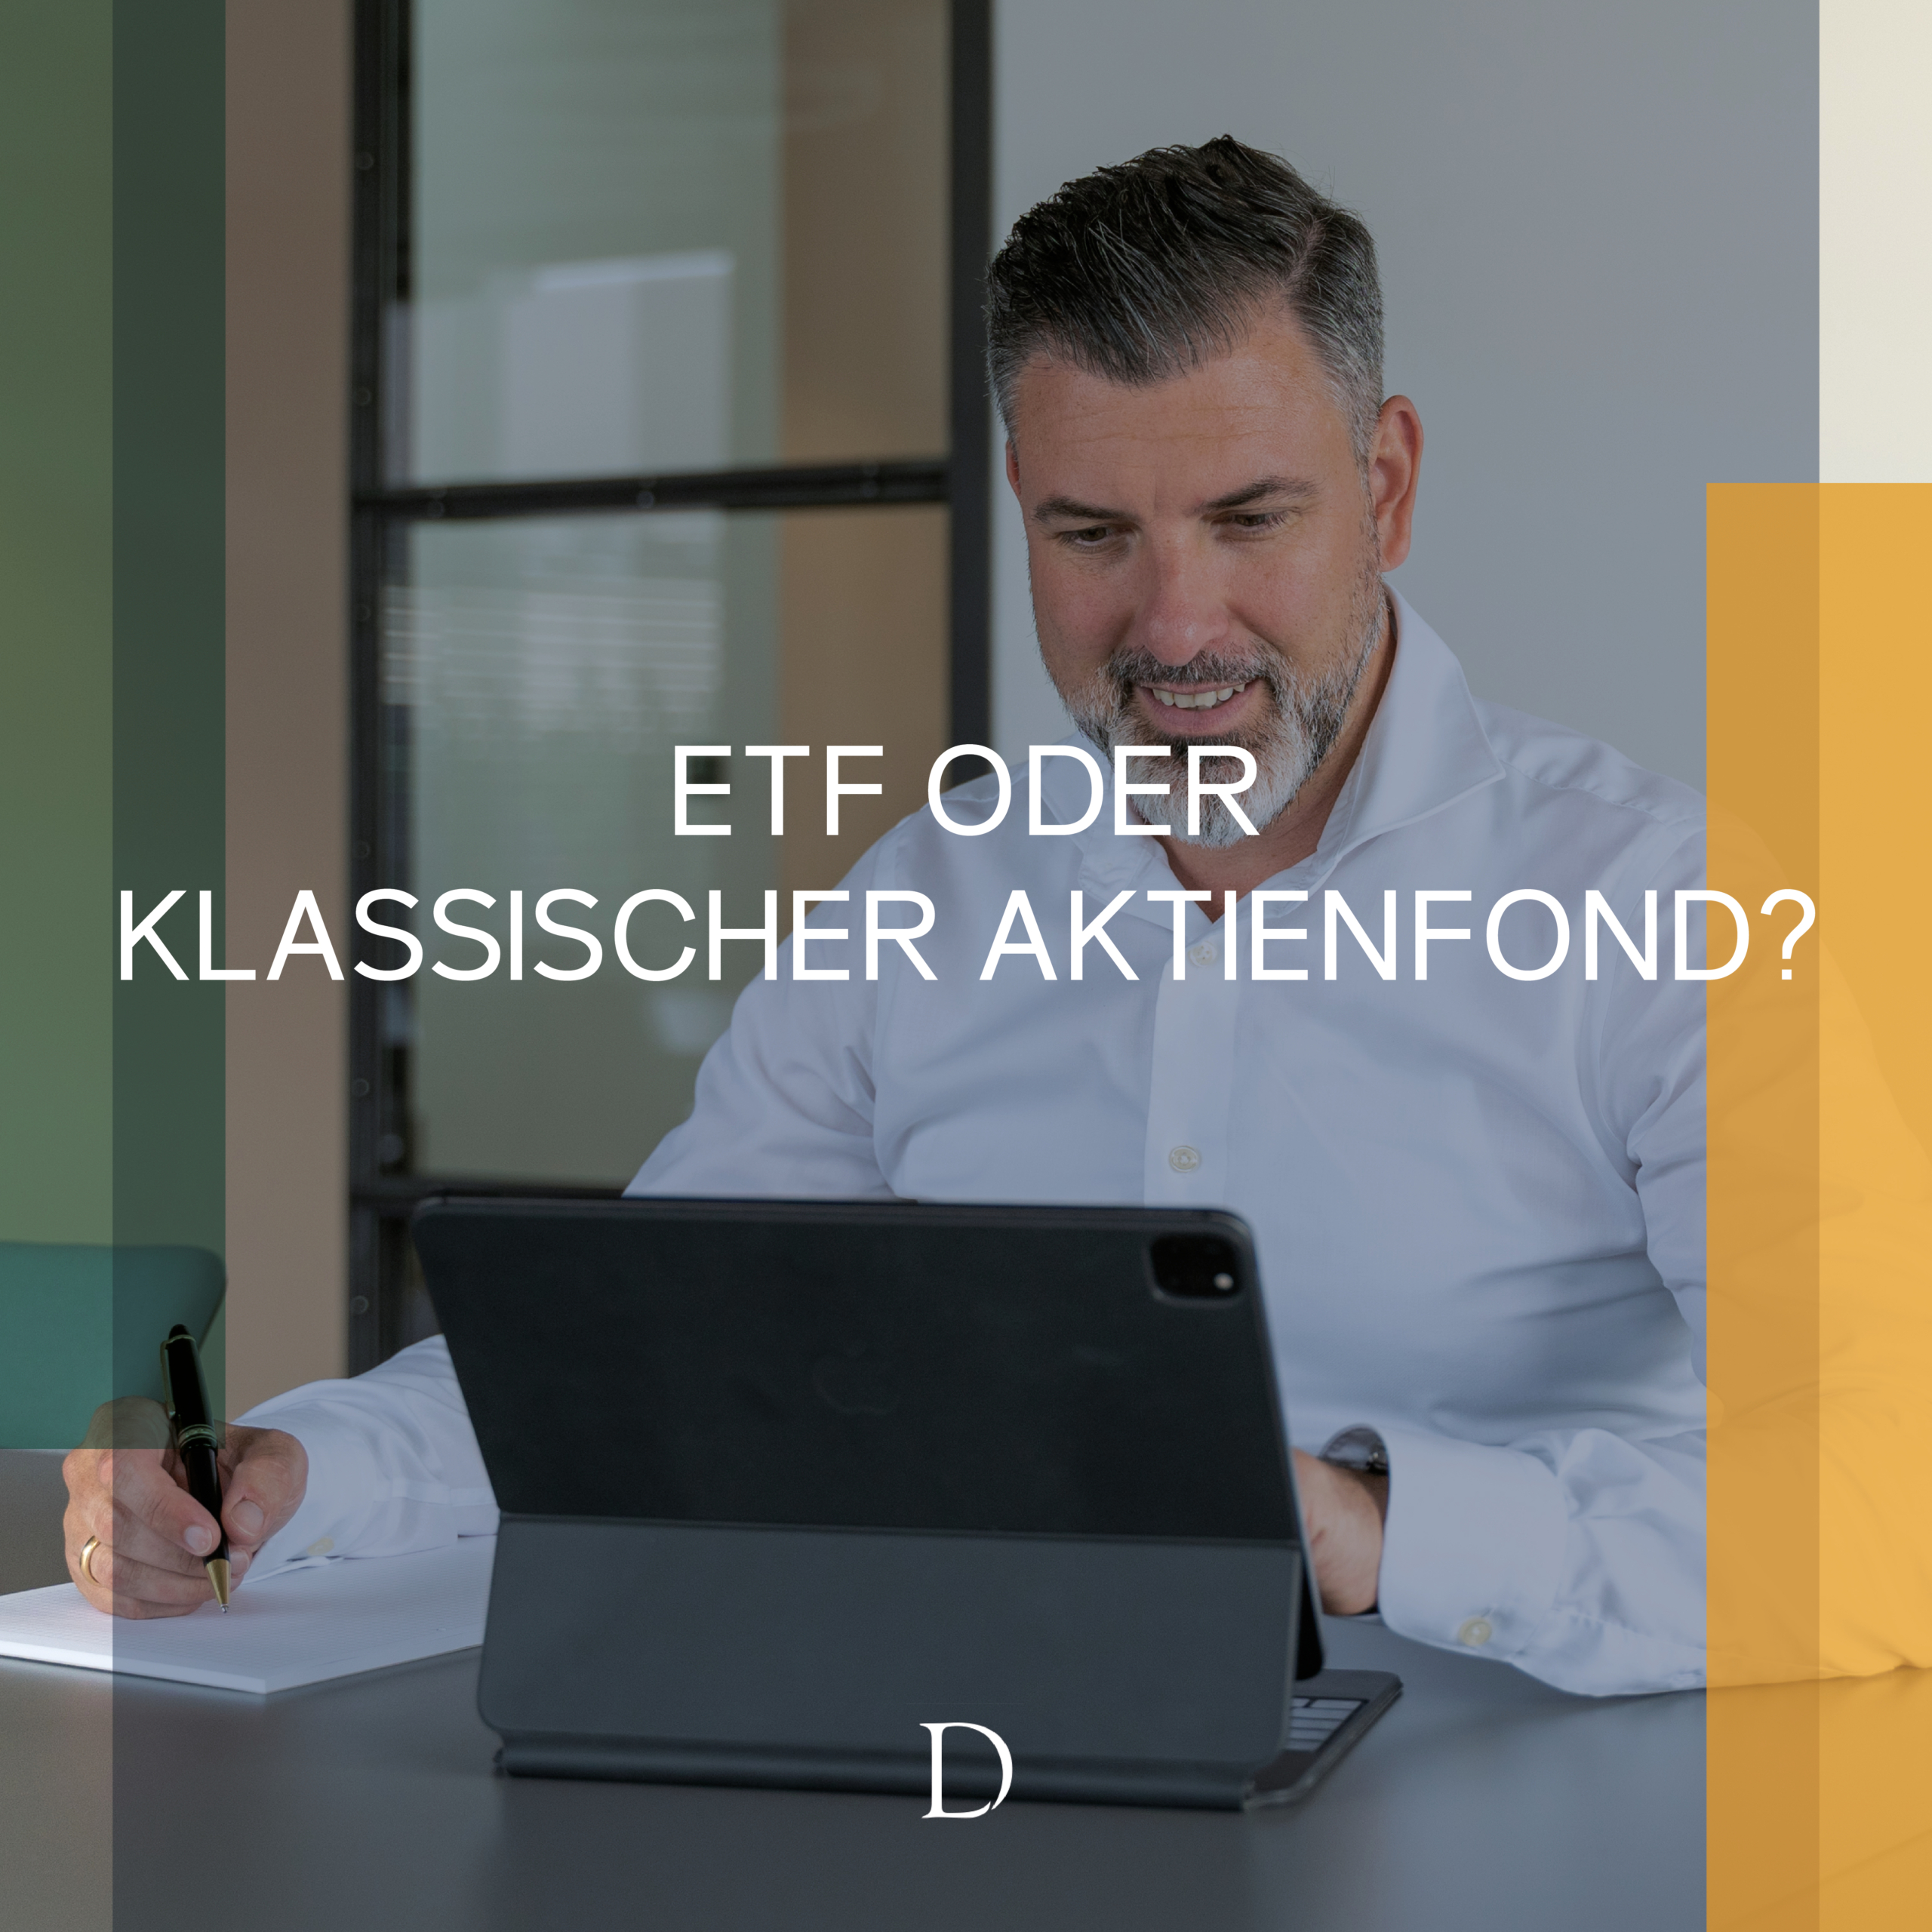 ETF oder klassischer Aktienfond? - Finanzkanzlei Daniel Lenz